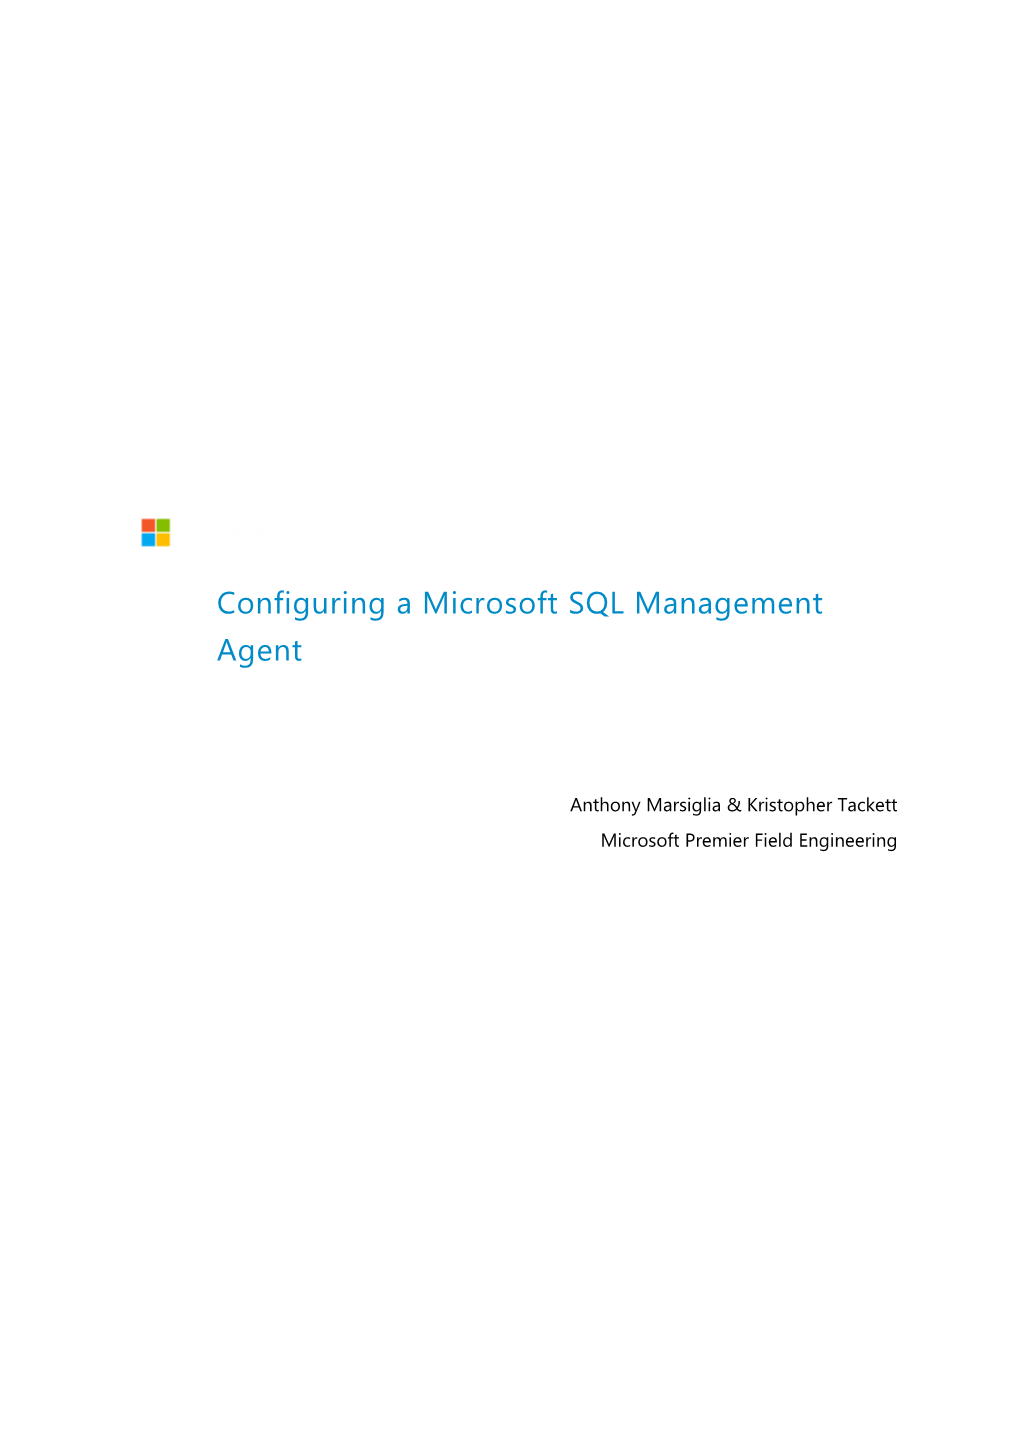 Configuring a Microsoft SQL Management Agent